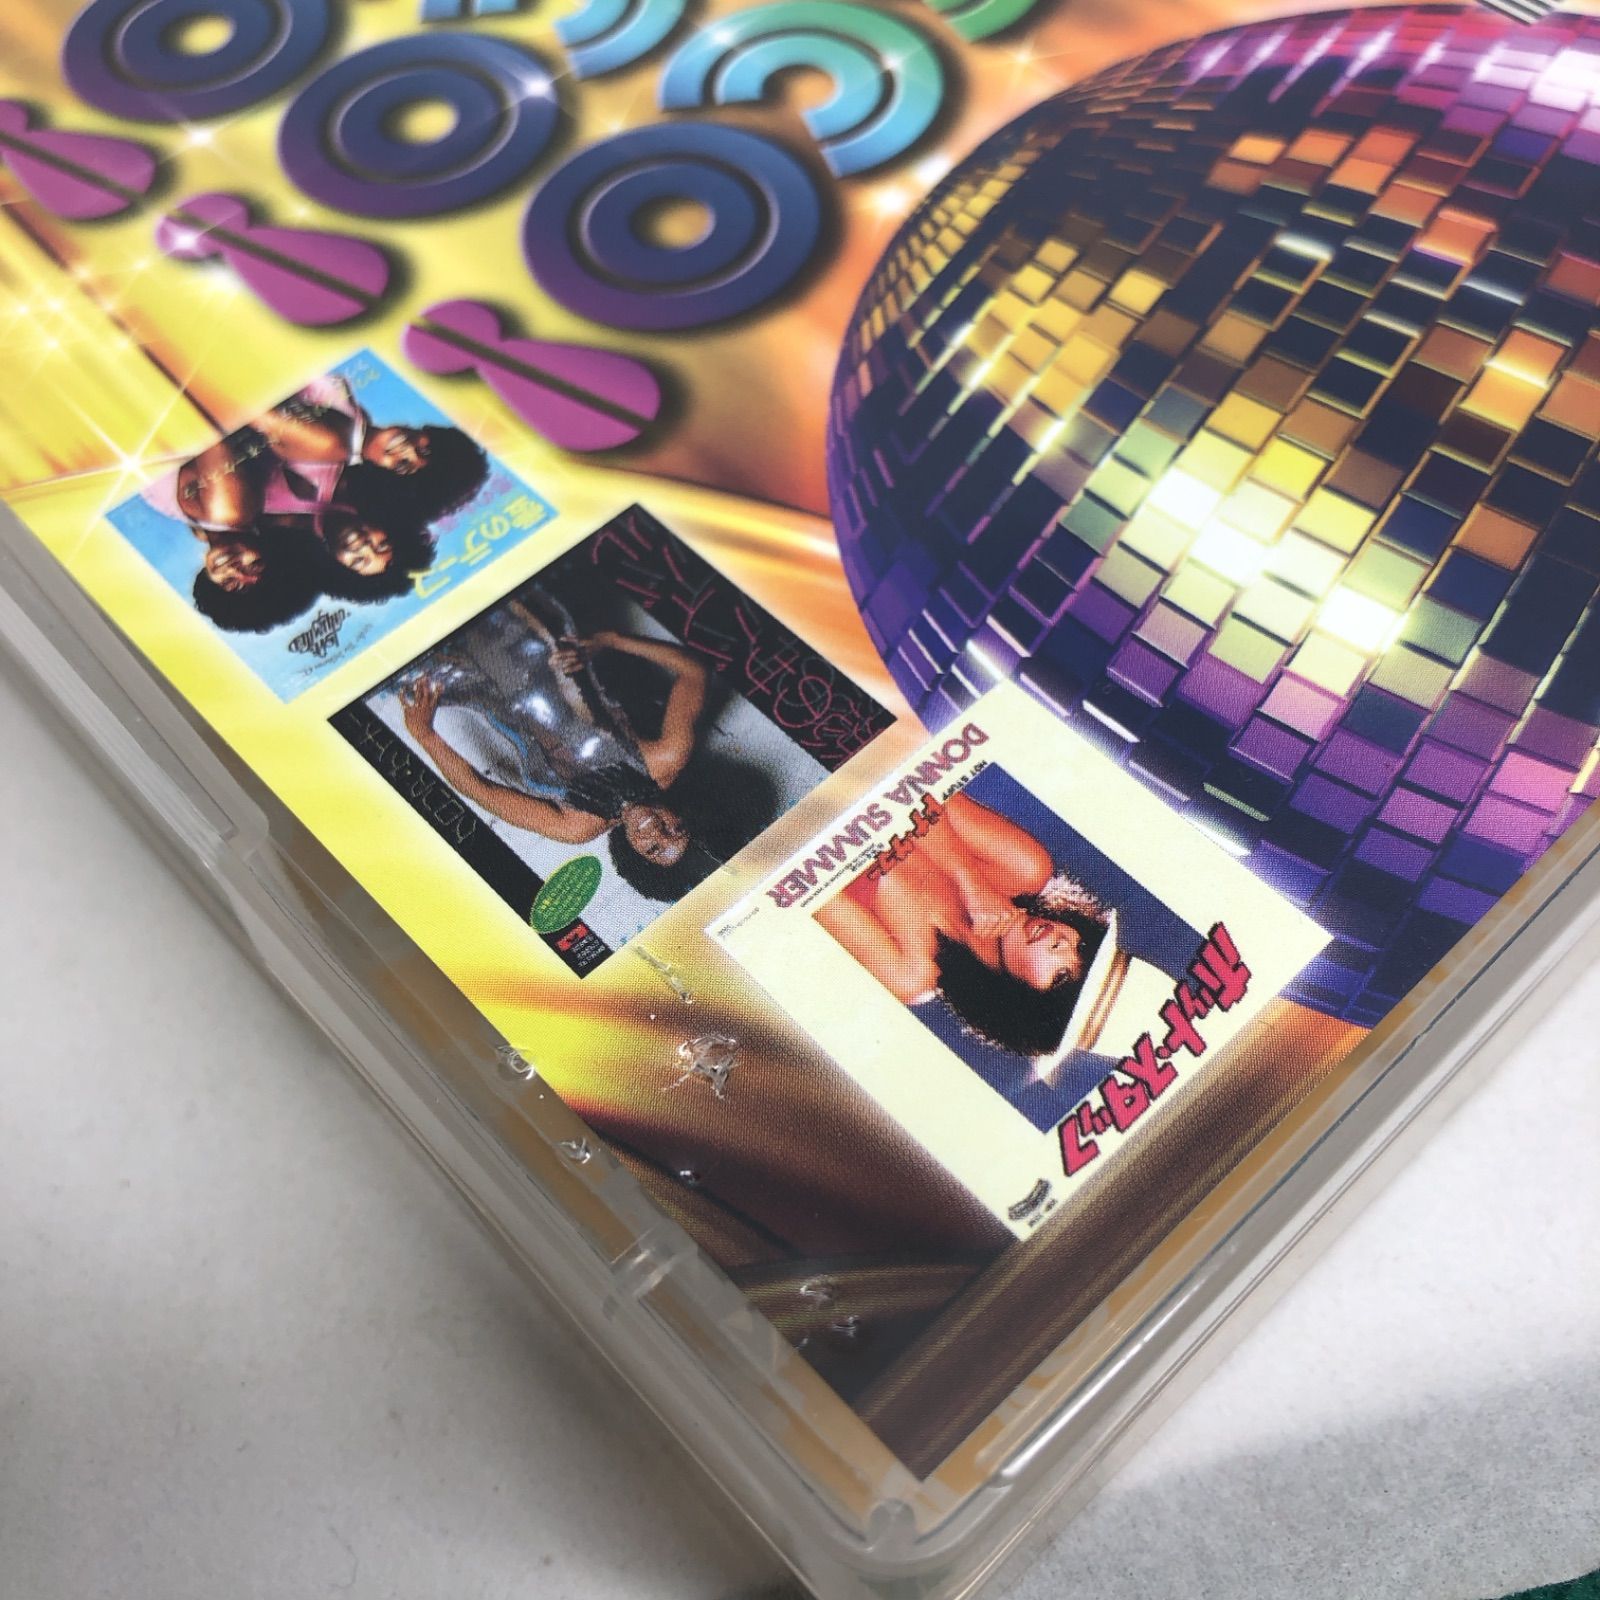 Disco！Disco！Disco！永遠のディスコヒッツ パート1』 CD5枚 - メルカリ